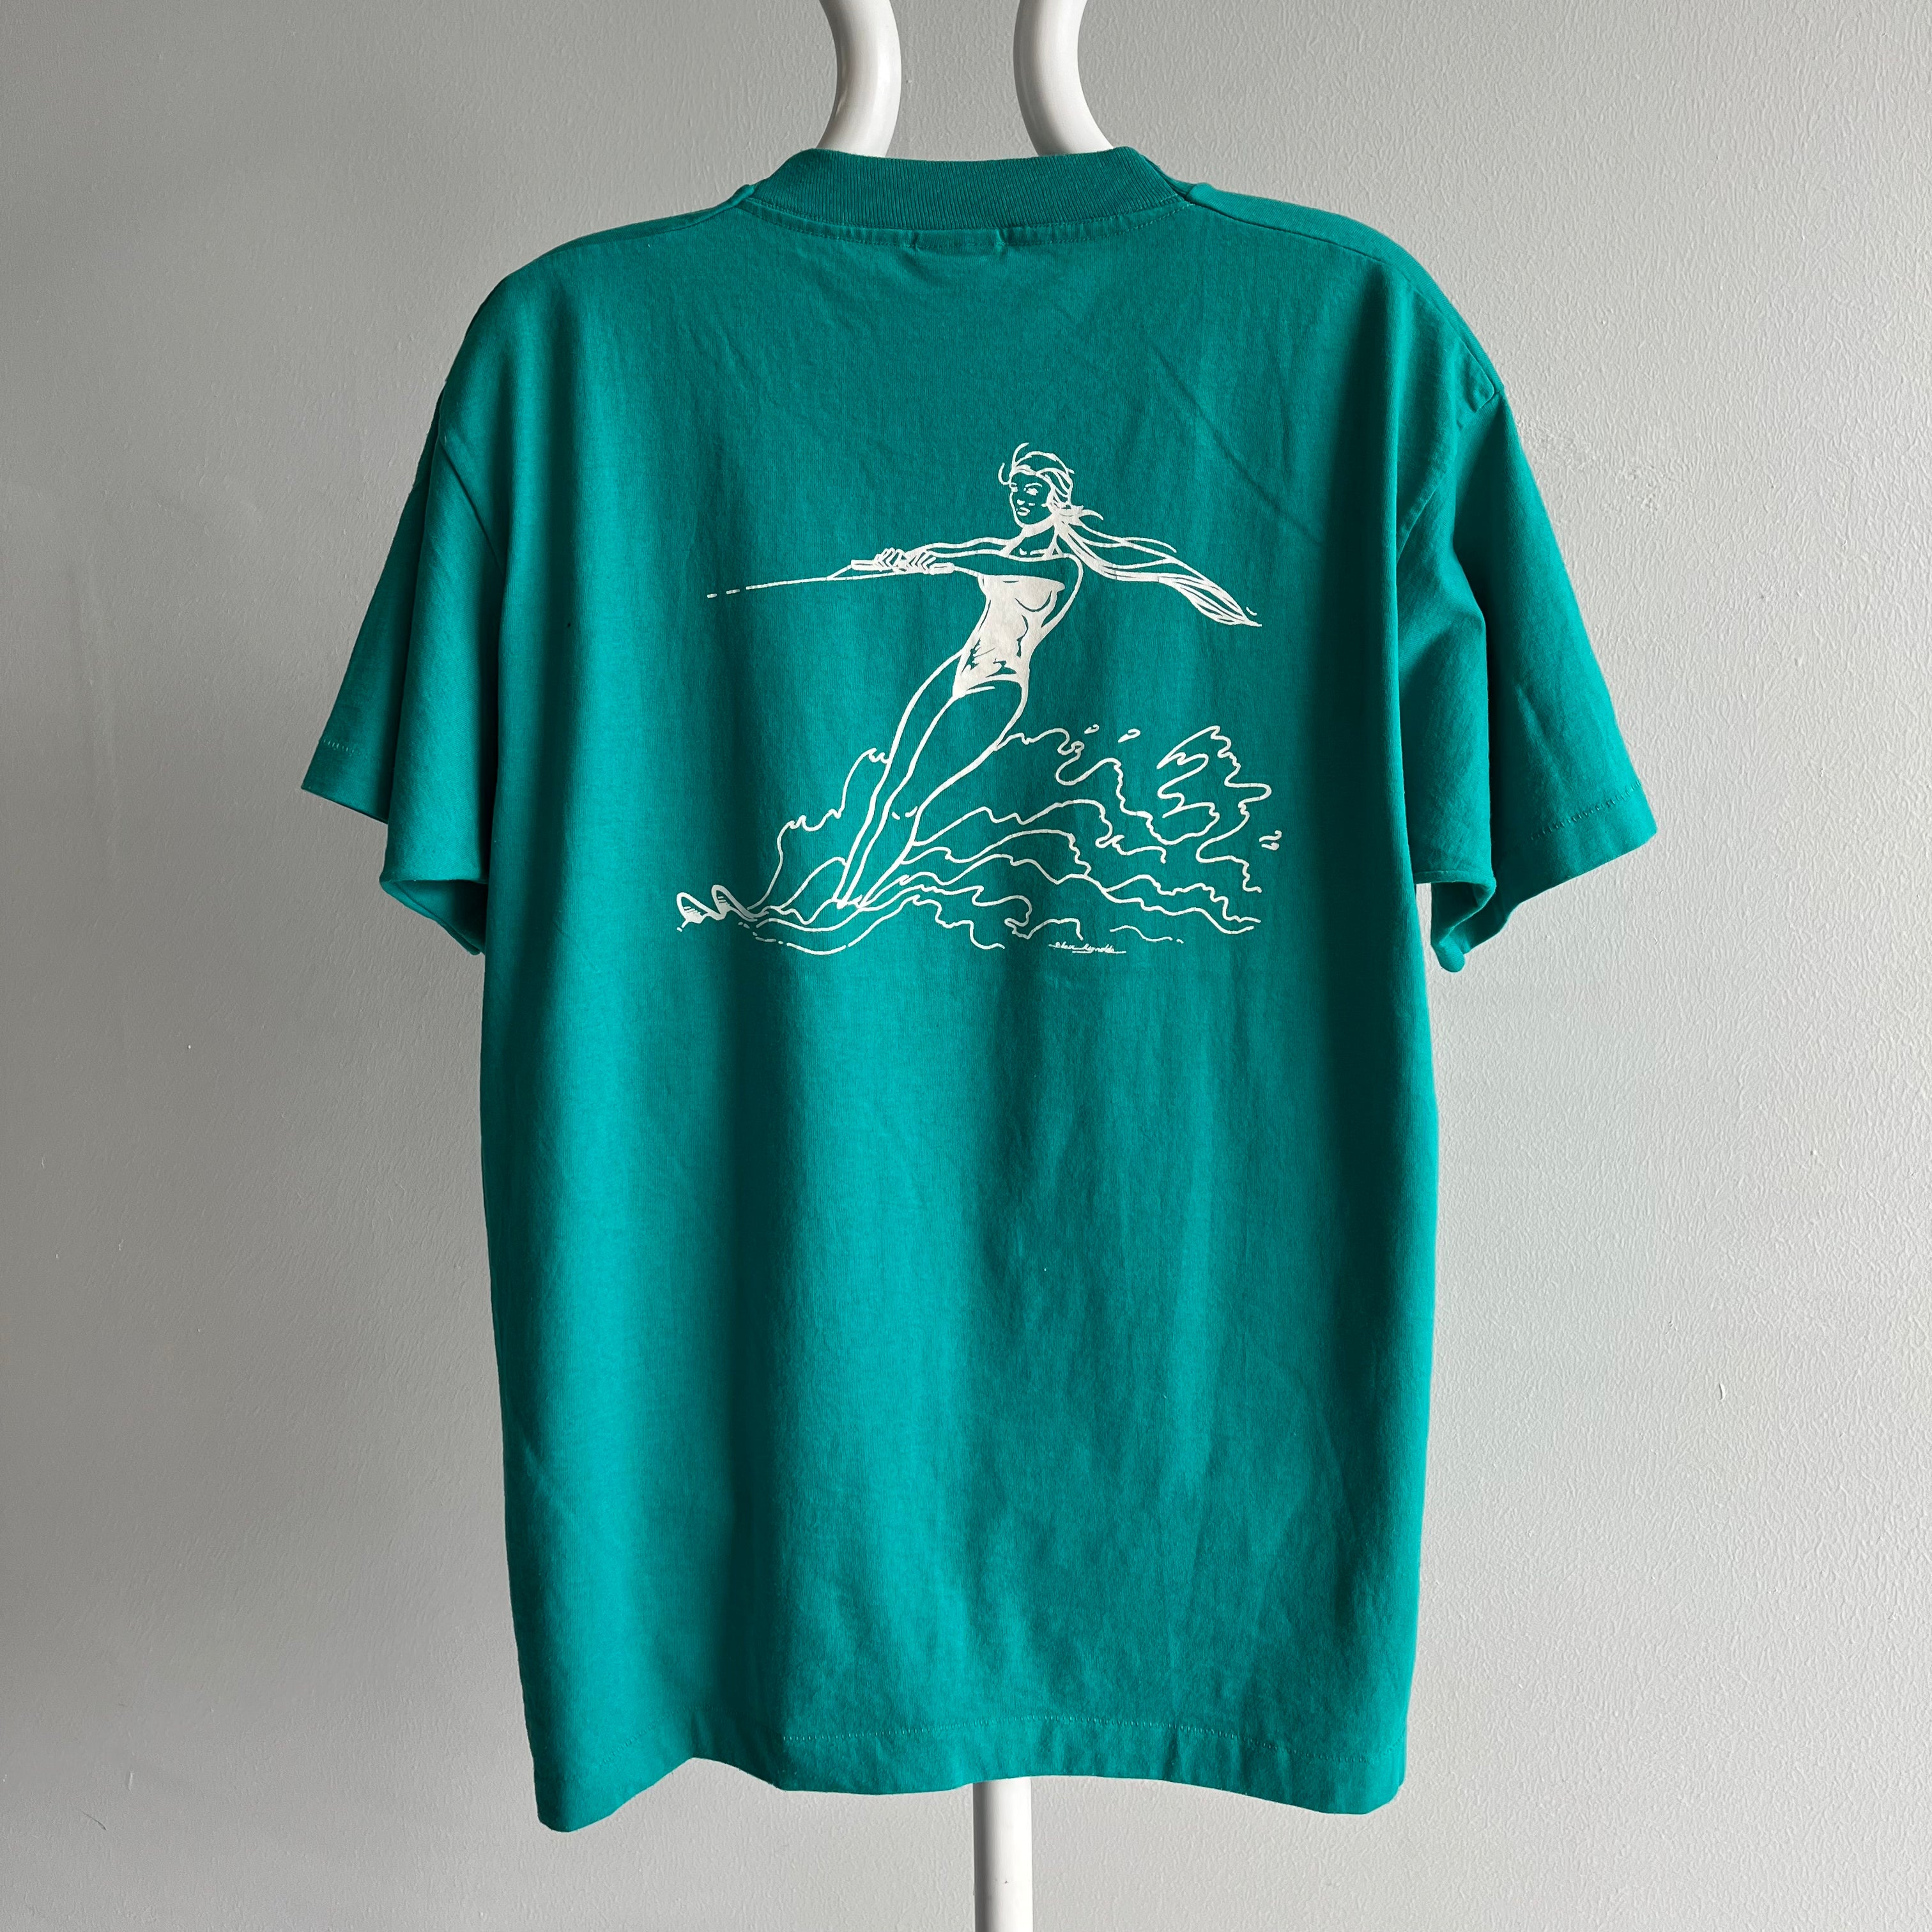 1980/90s Salcha Marine, Alaska Tourist T-Shirt - The Backside!